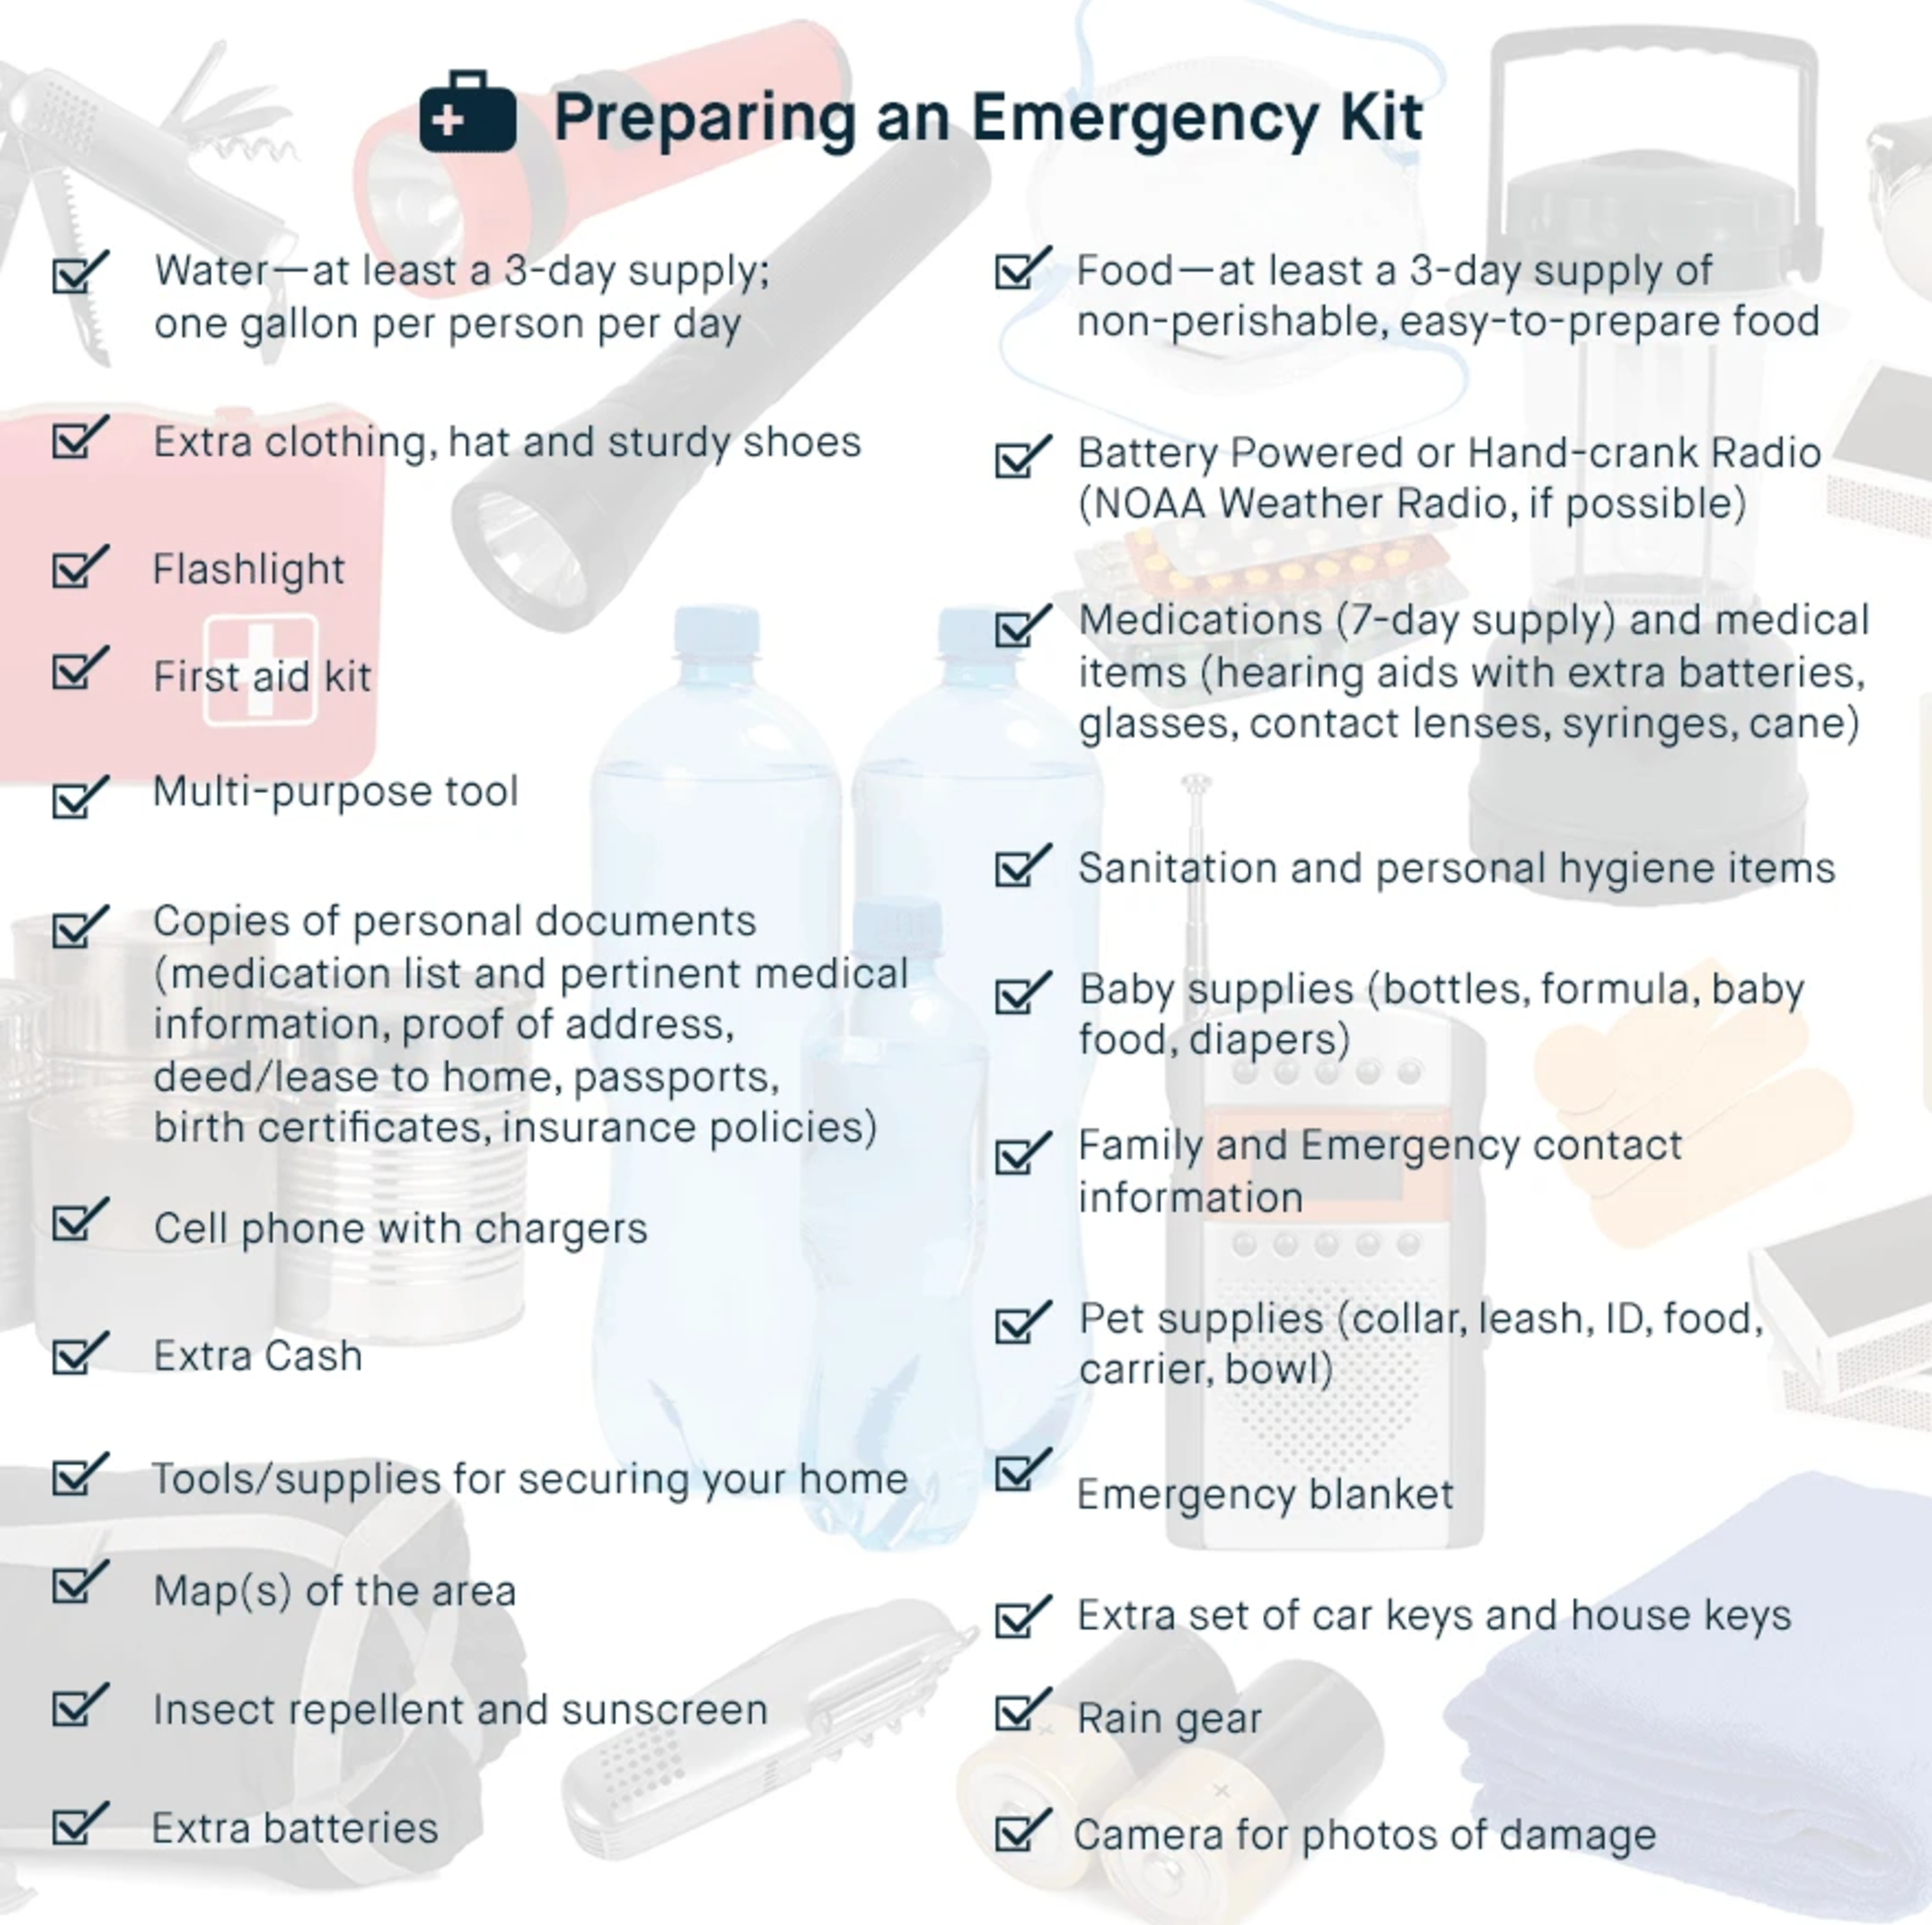 Preparing an Emergency Kit